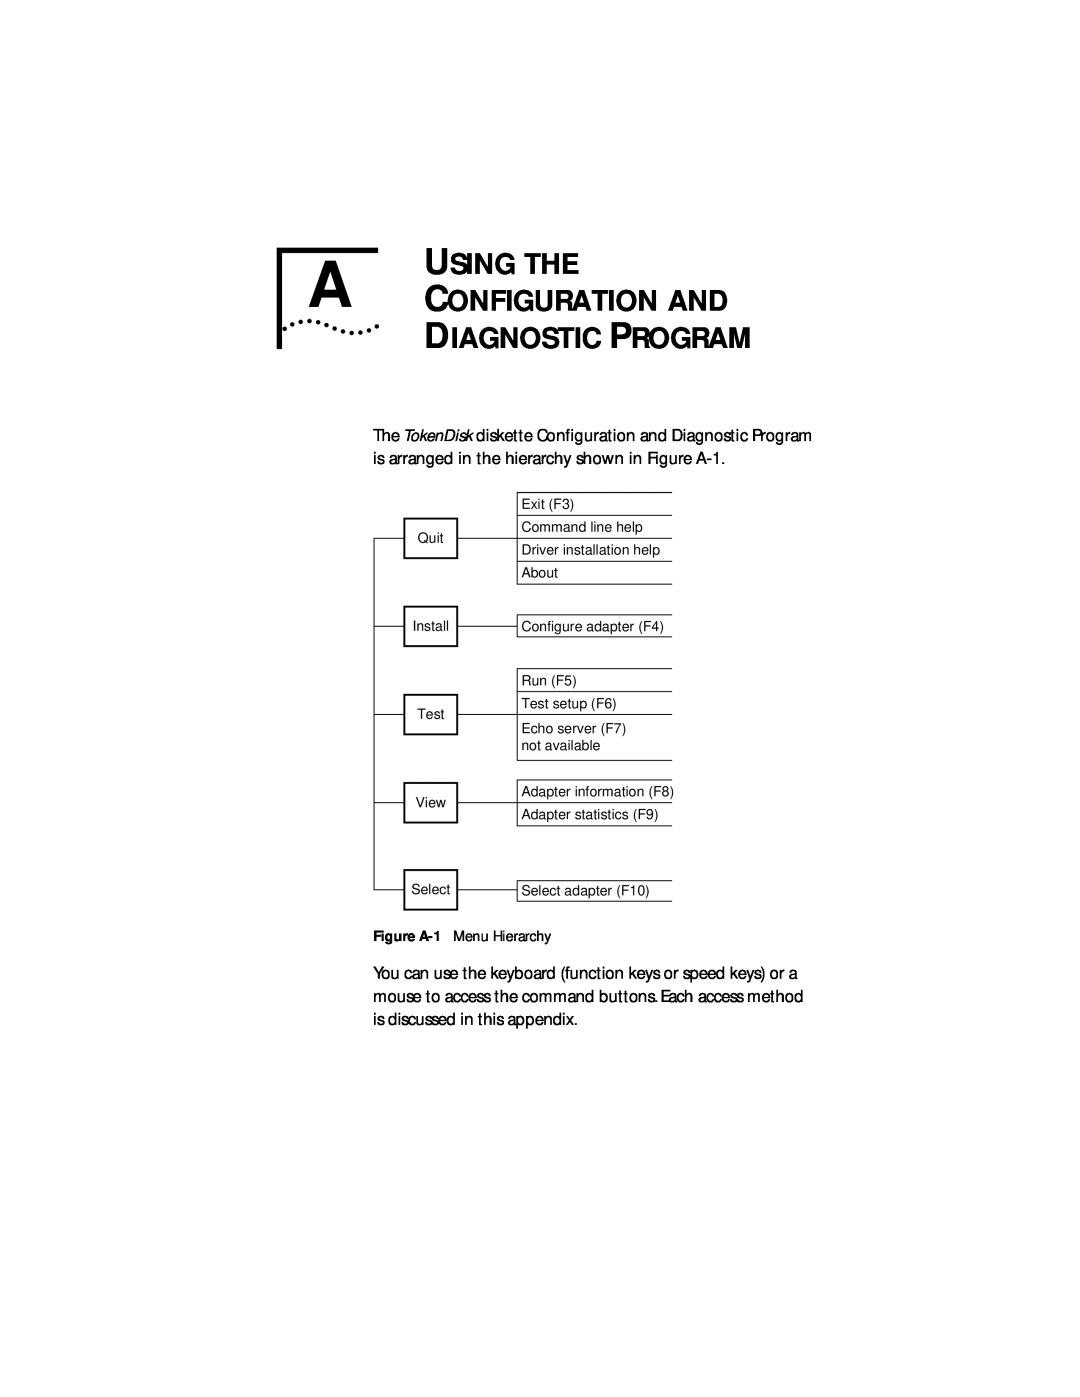 IBM 09-0572-000 manual Using The A Configuration And Diagnostic Program, Figure A-1 Menu Hierarchy 